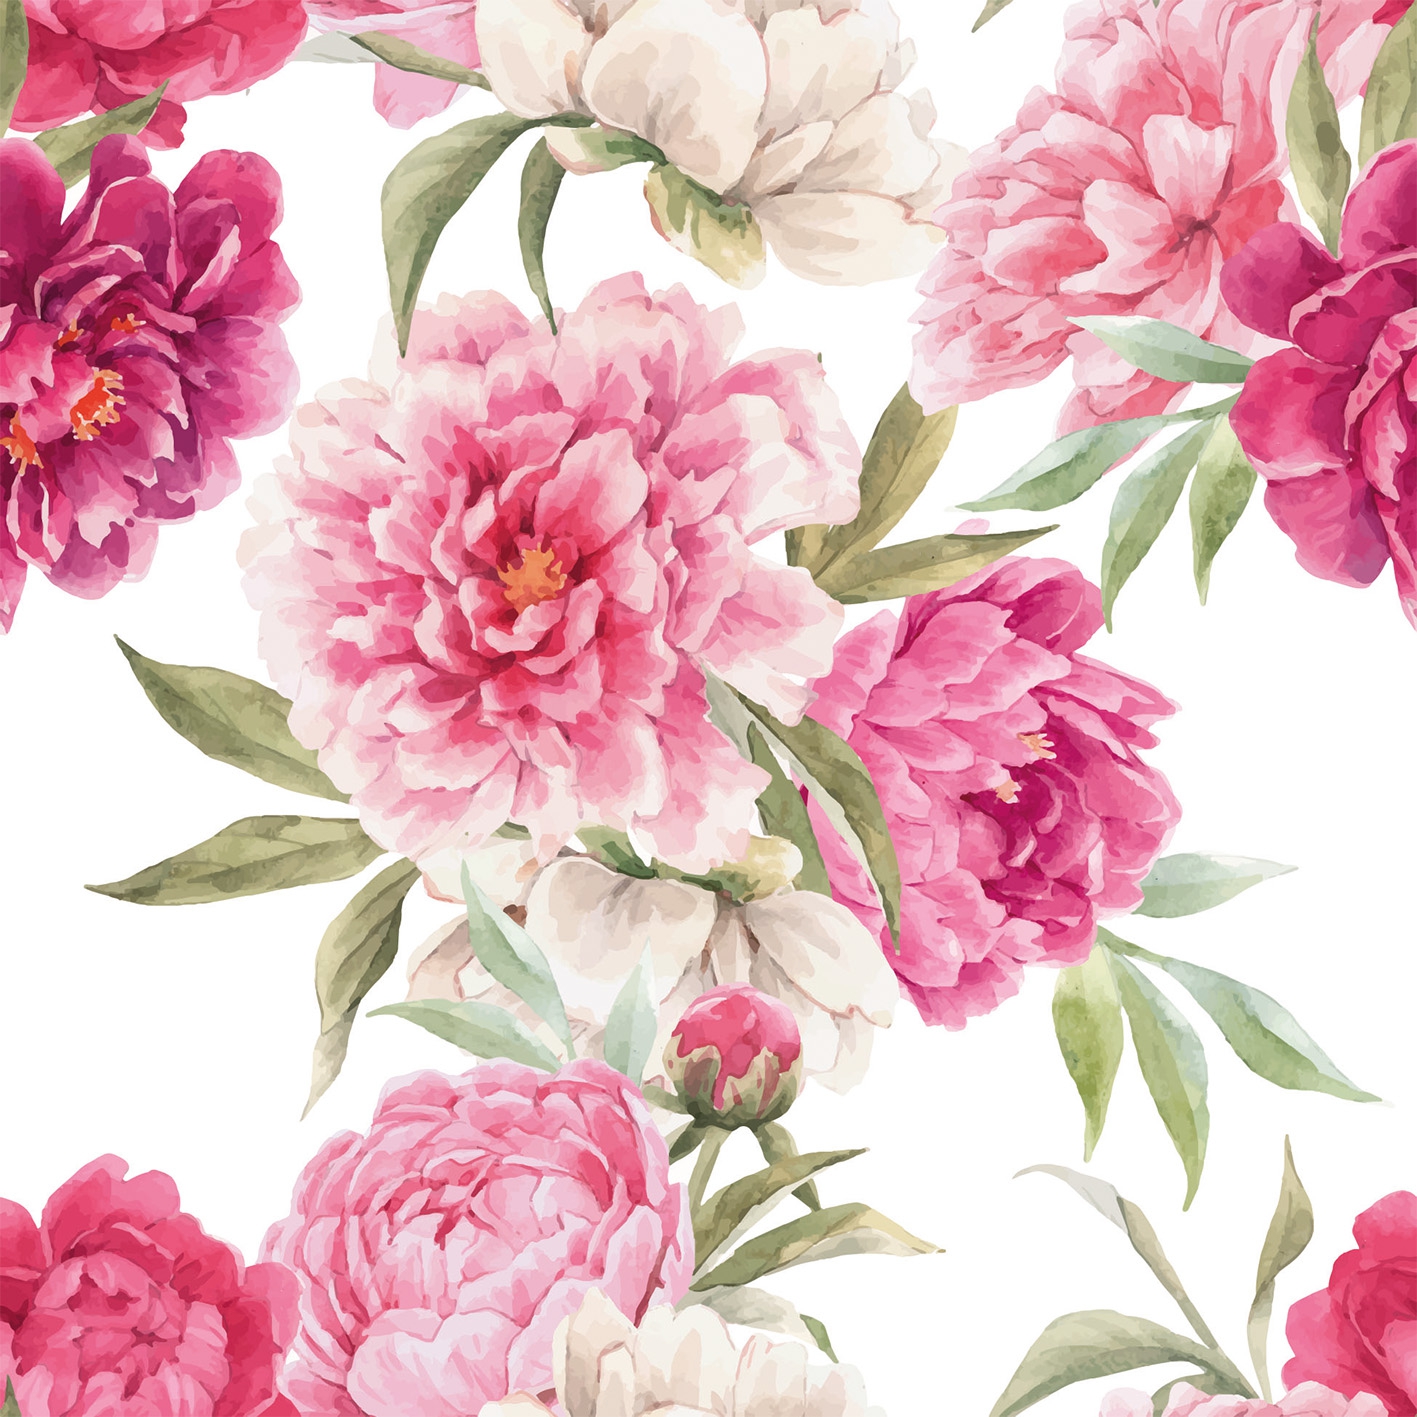 Napkins 24x24 cm - pink flowers